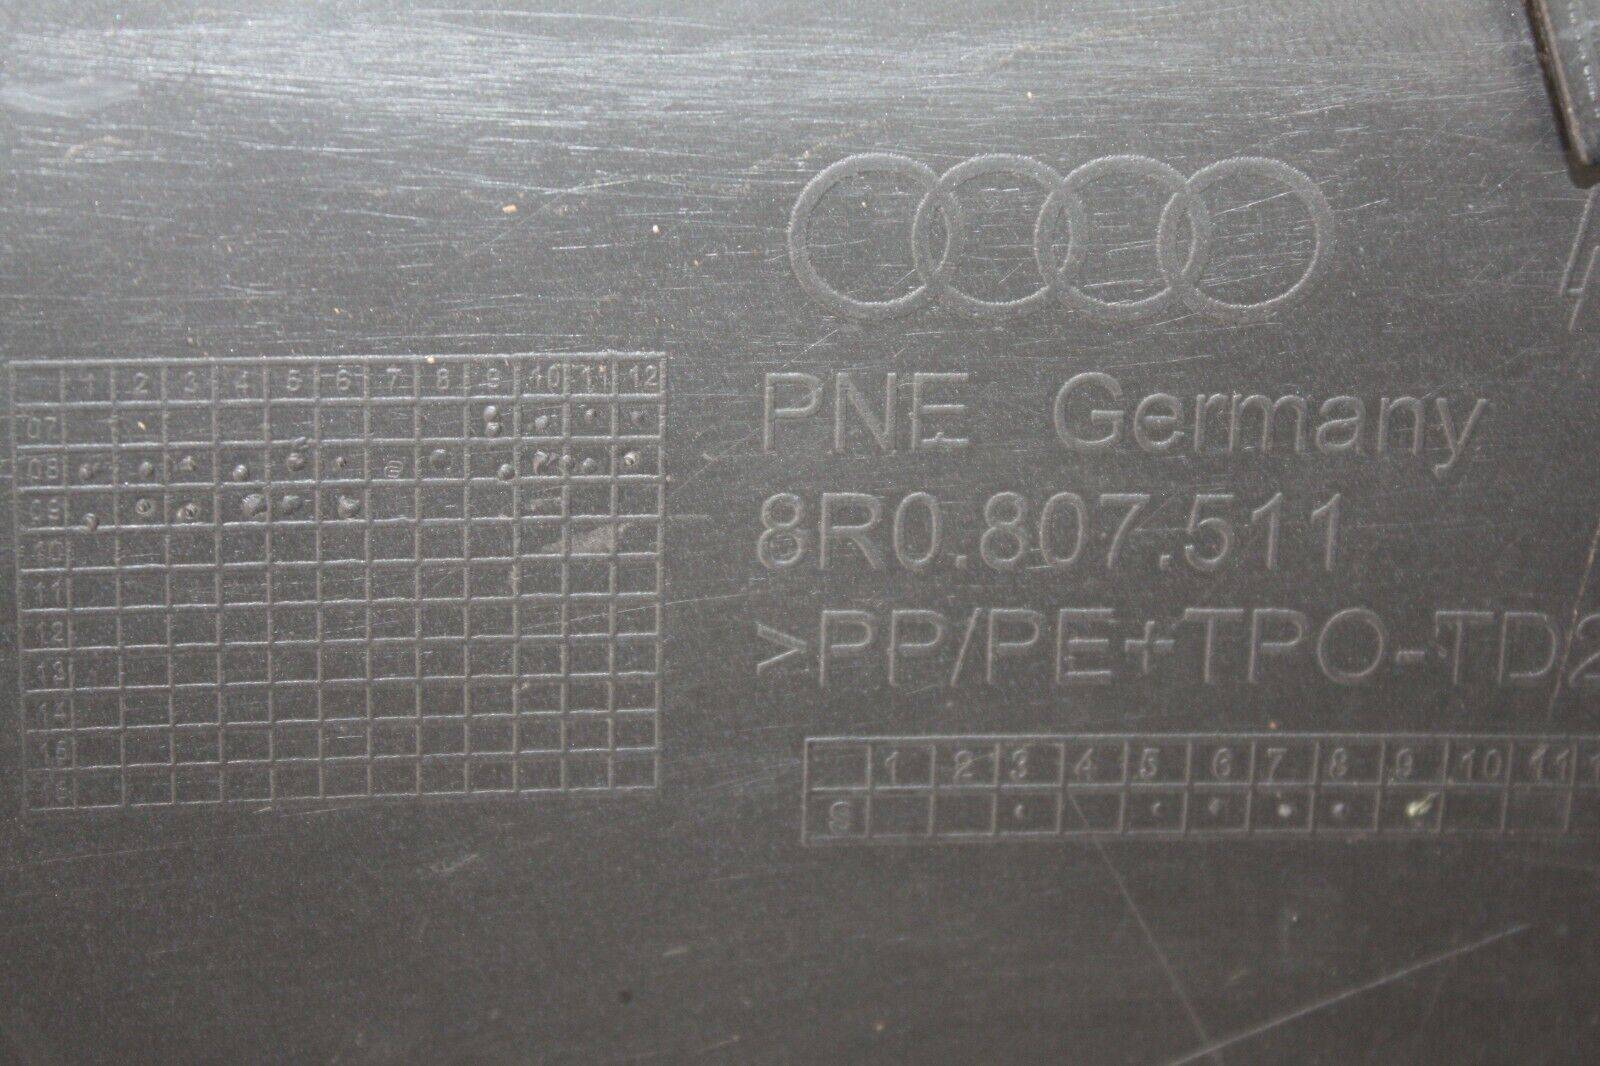 Audi-Q5-Rear-Bumper-2009-TO-2012-8R0807511-175367535363-12